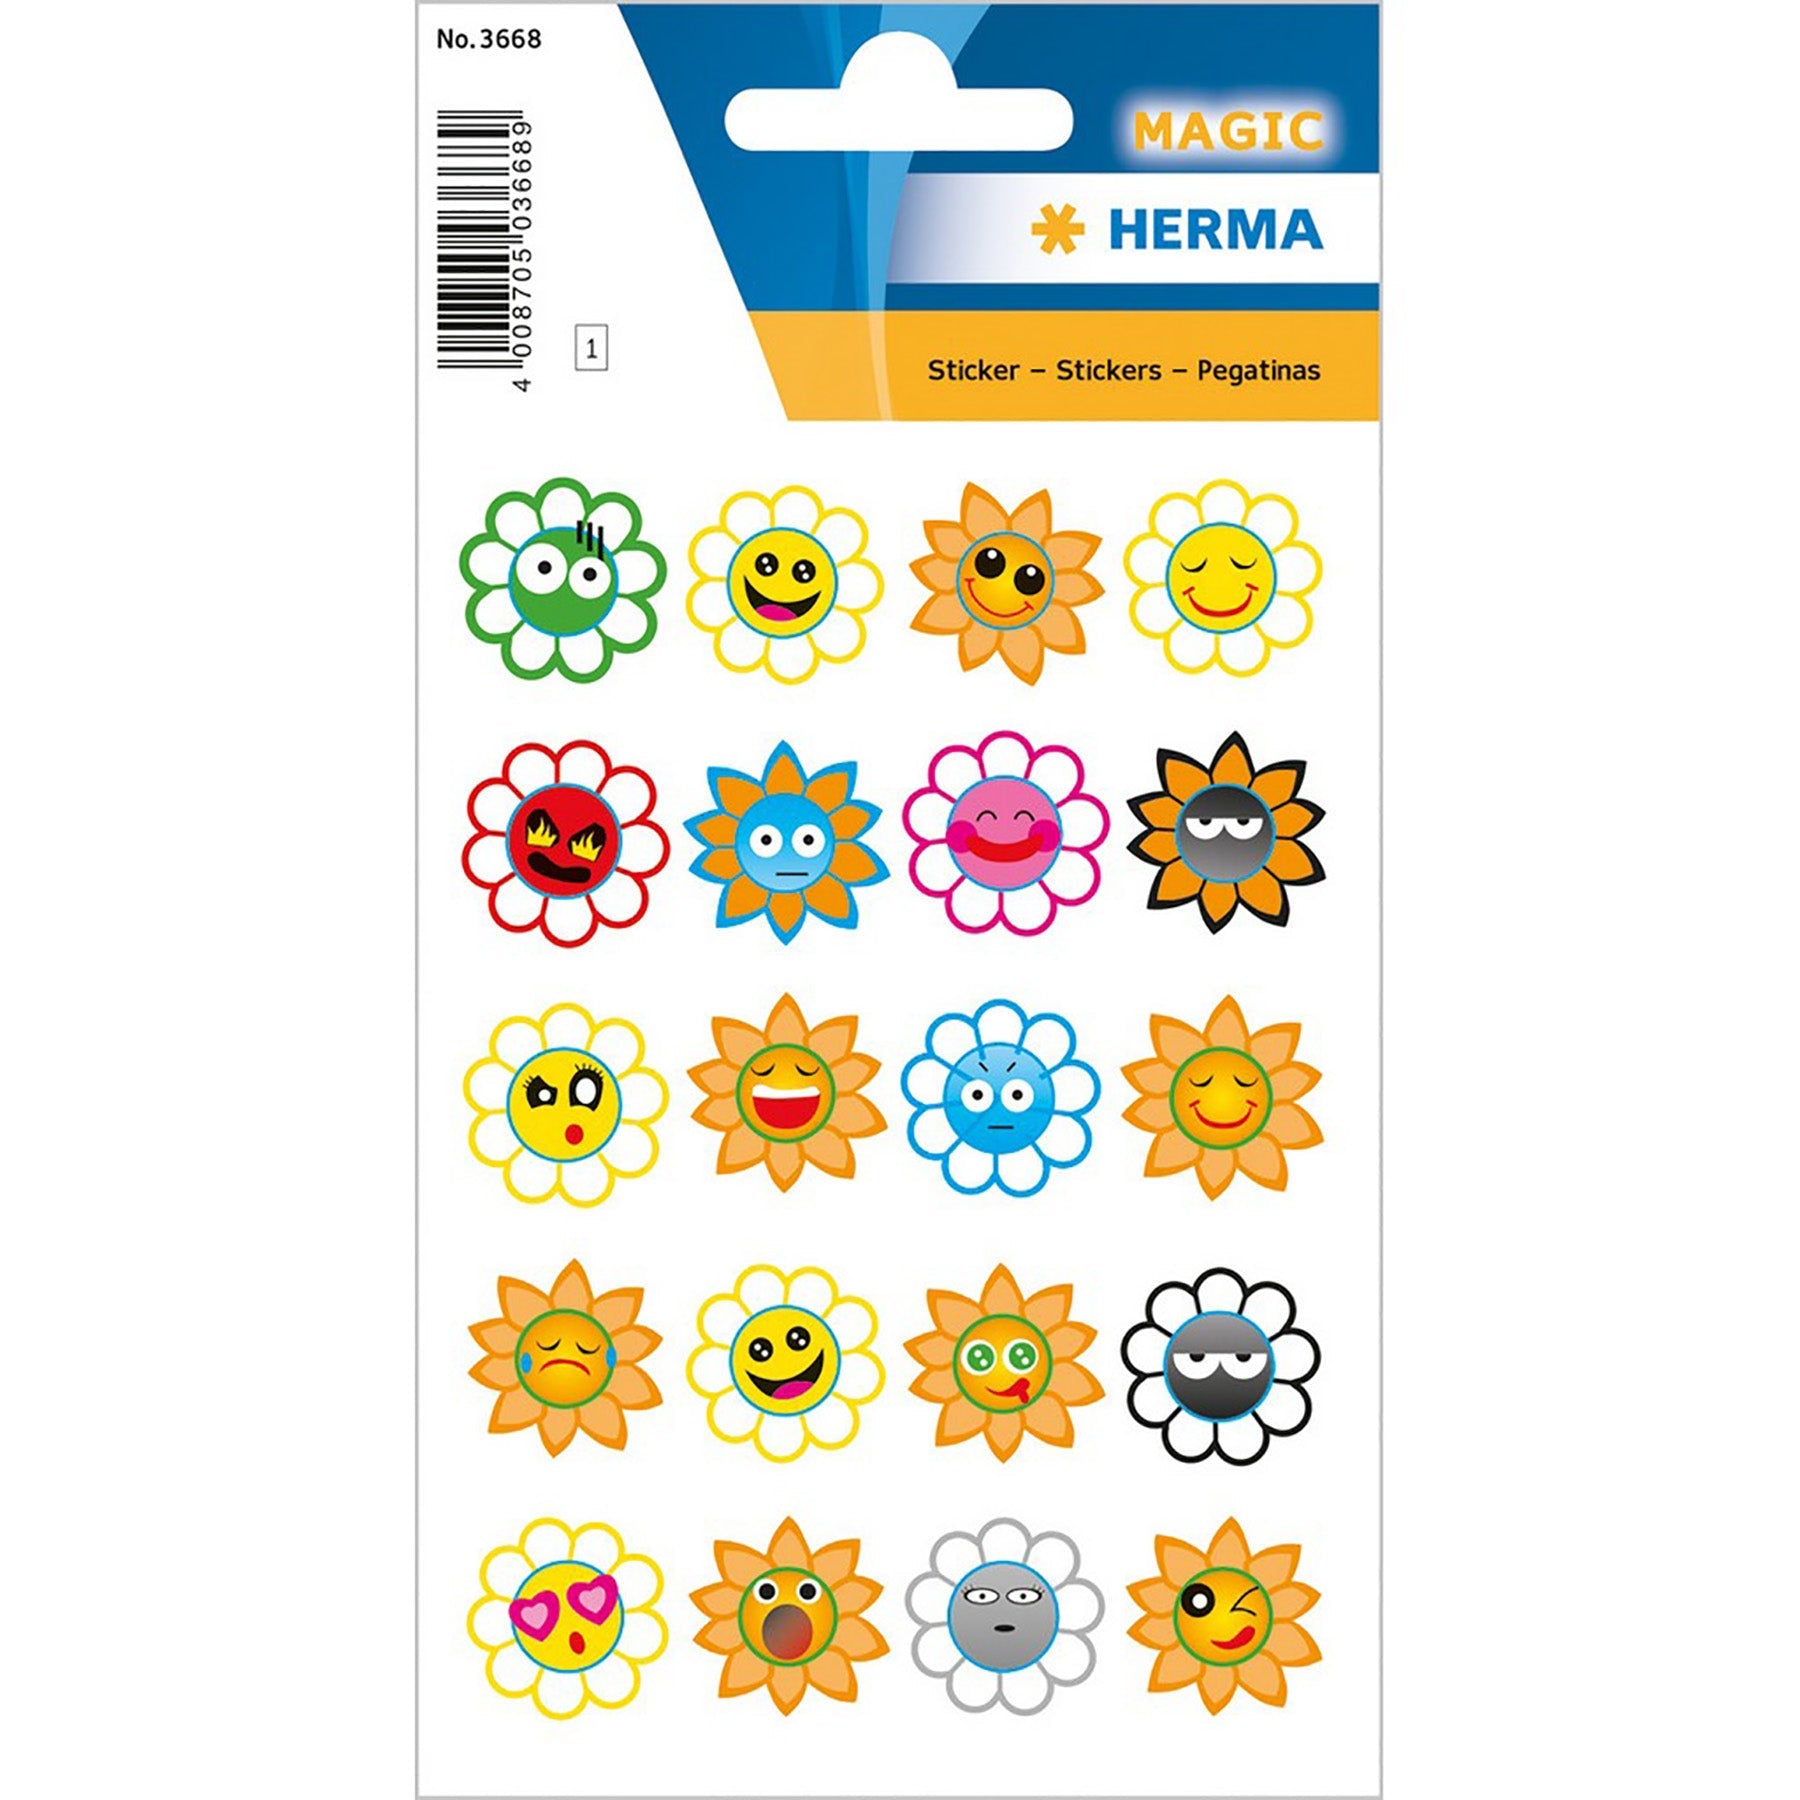 Herma Magic Stickers Crazy Suns Puffy 4.75x3.1in Sheet